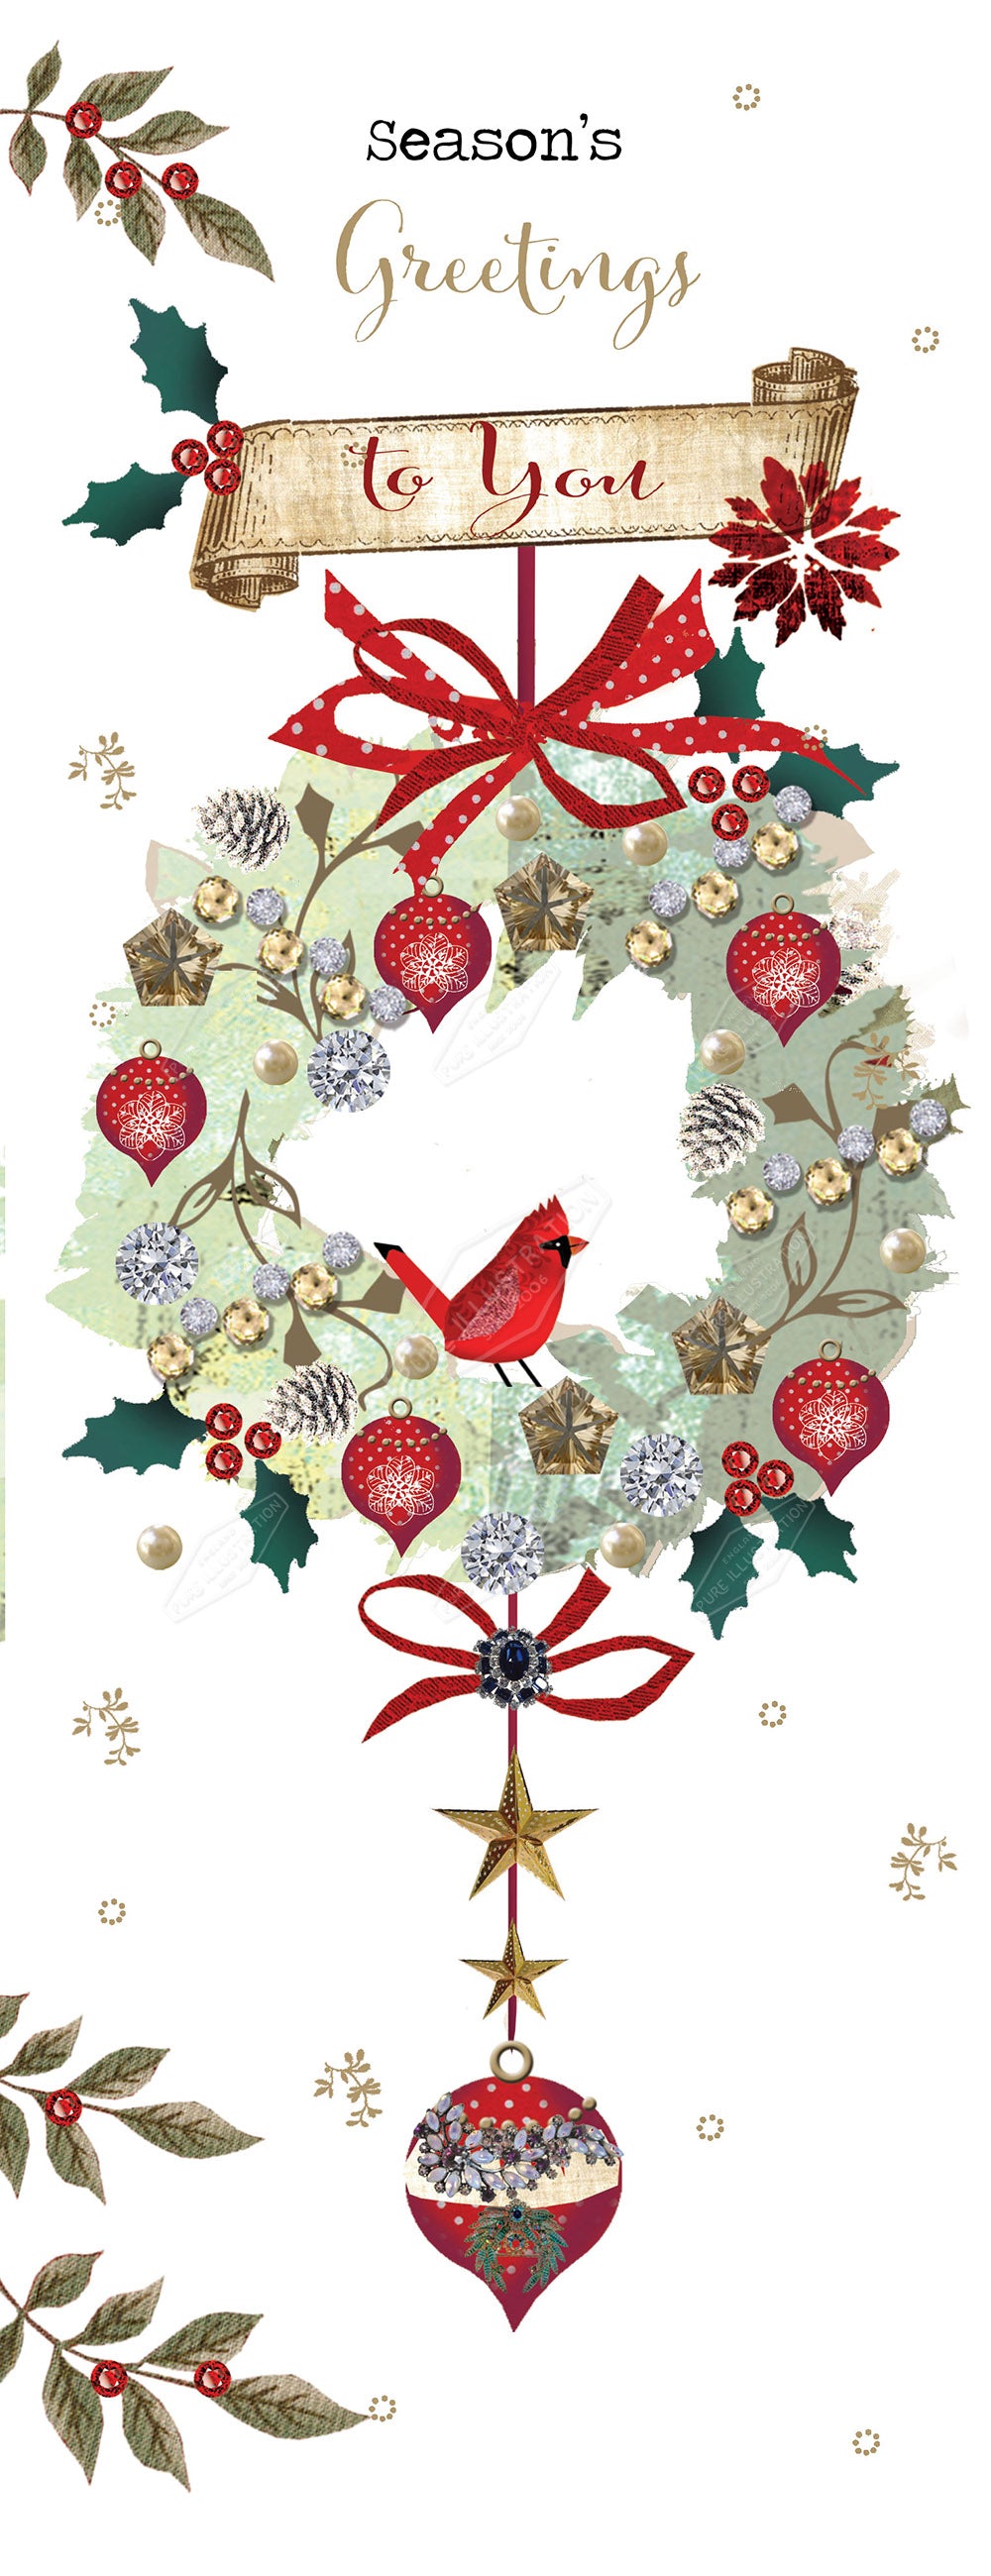 00027789DEV - Deva Evans is represented by Pure Art Licensing Agency - Christmas Greeting Card Design